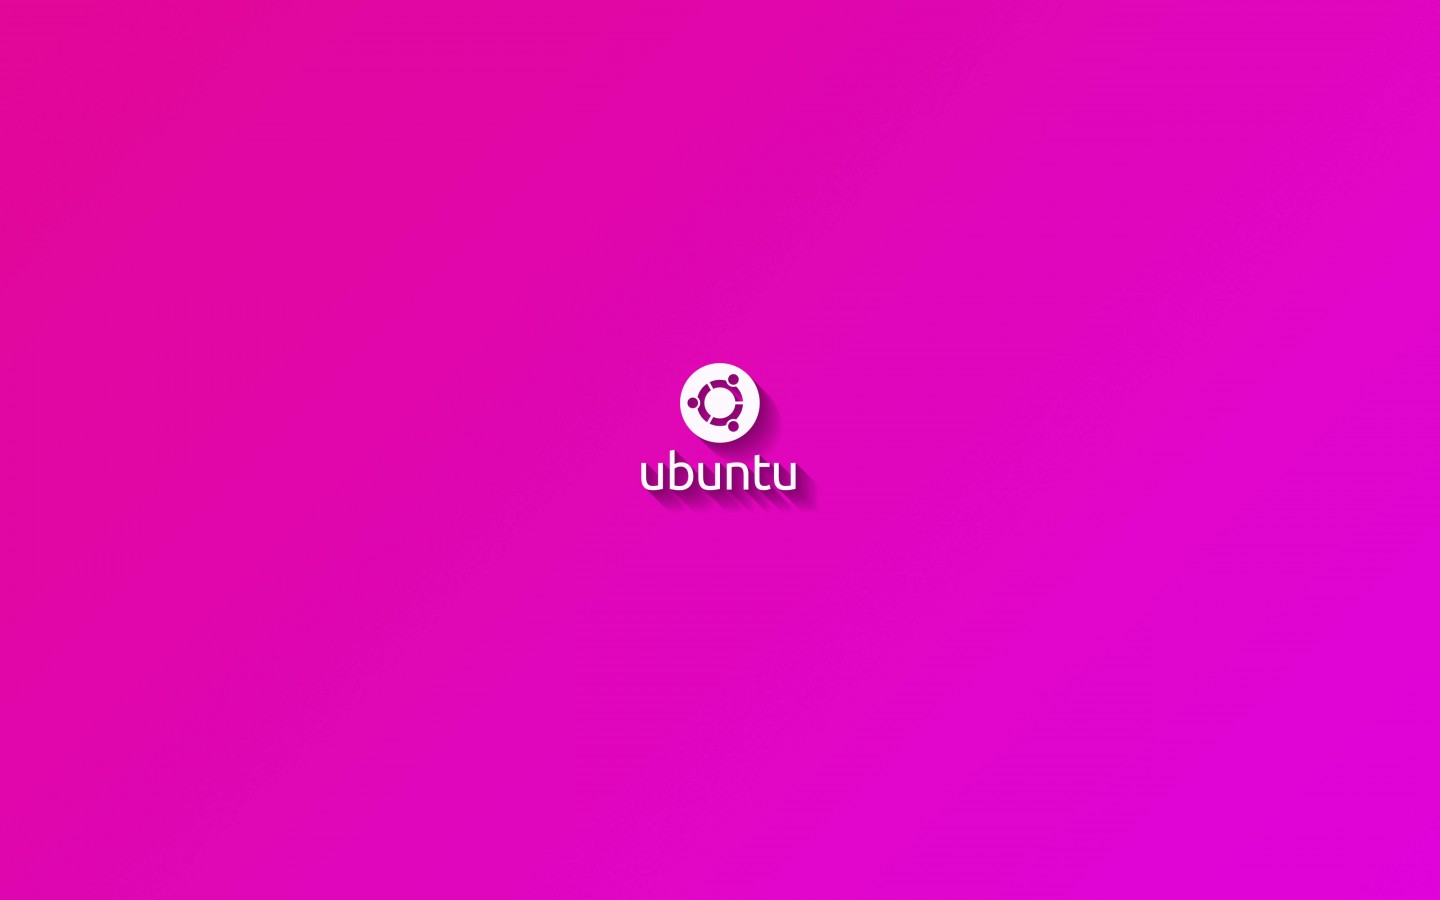 Ubuntu Flat Shadow Pink Wallpaper for Desktop 1440x900